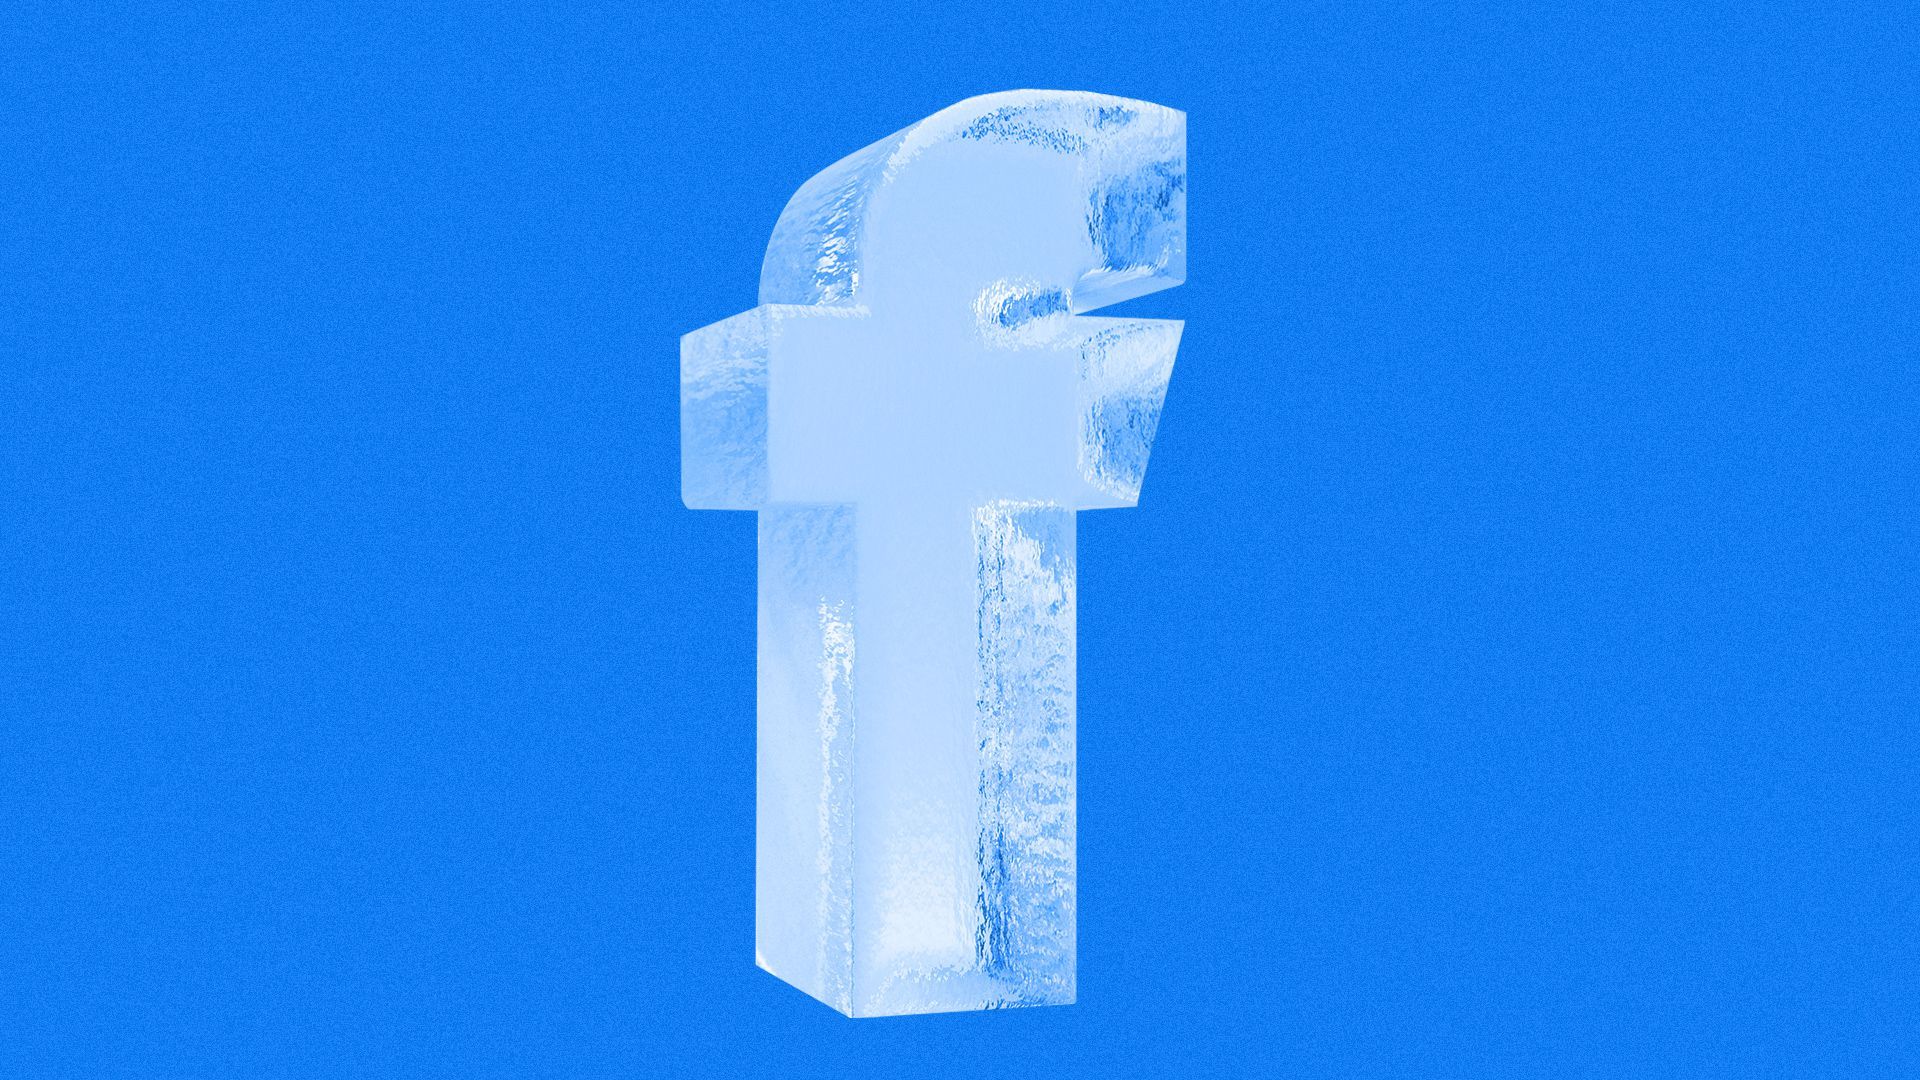 Illustration of the Facebook "f" logo made transparent.  